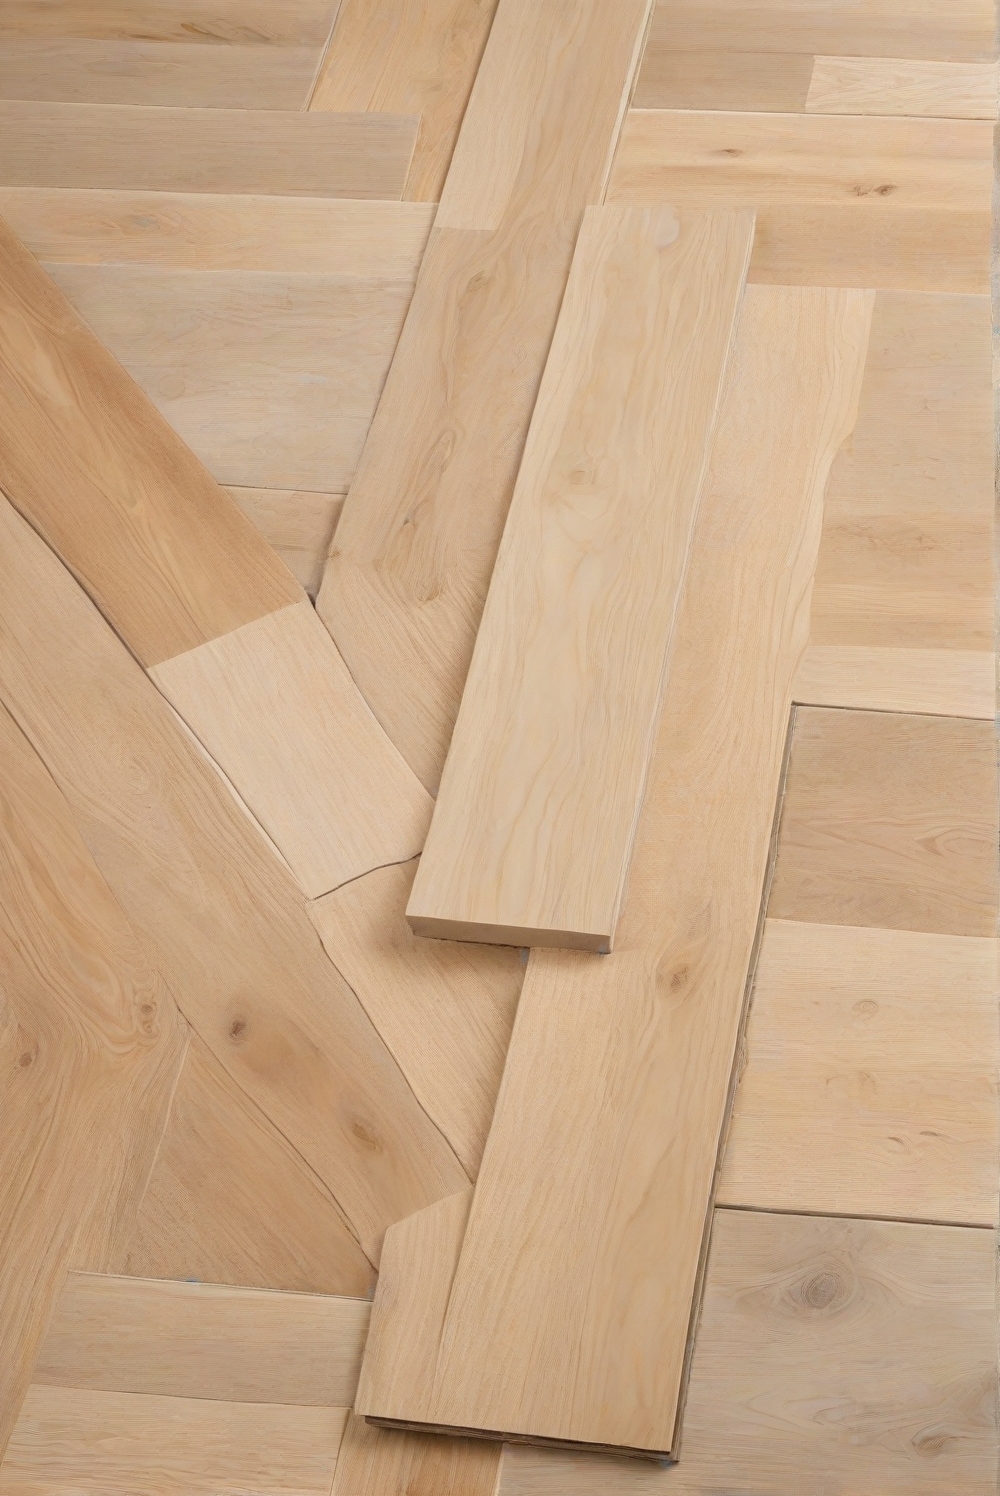 hardwood flooring,wood flooring,vinyl plank flooring,laminate floor,bamboo flooring,tile flooring,engineered hardwood flooring